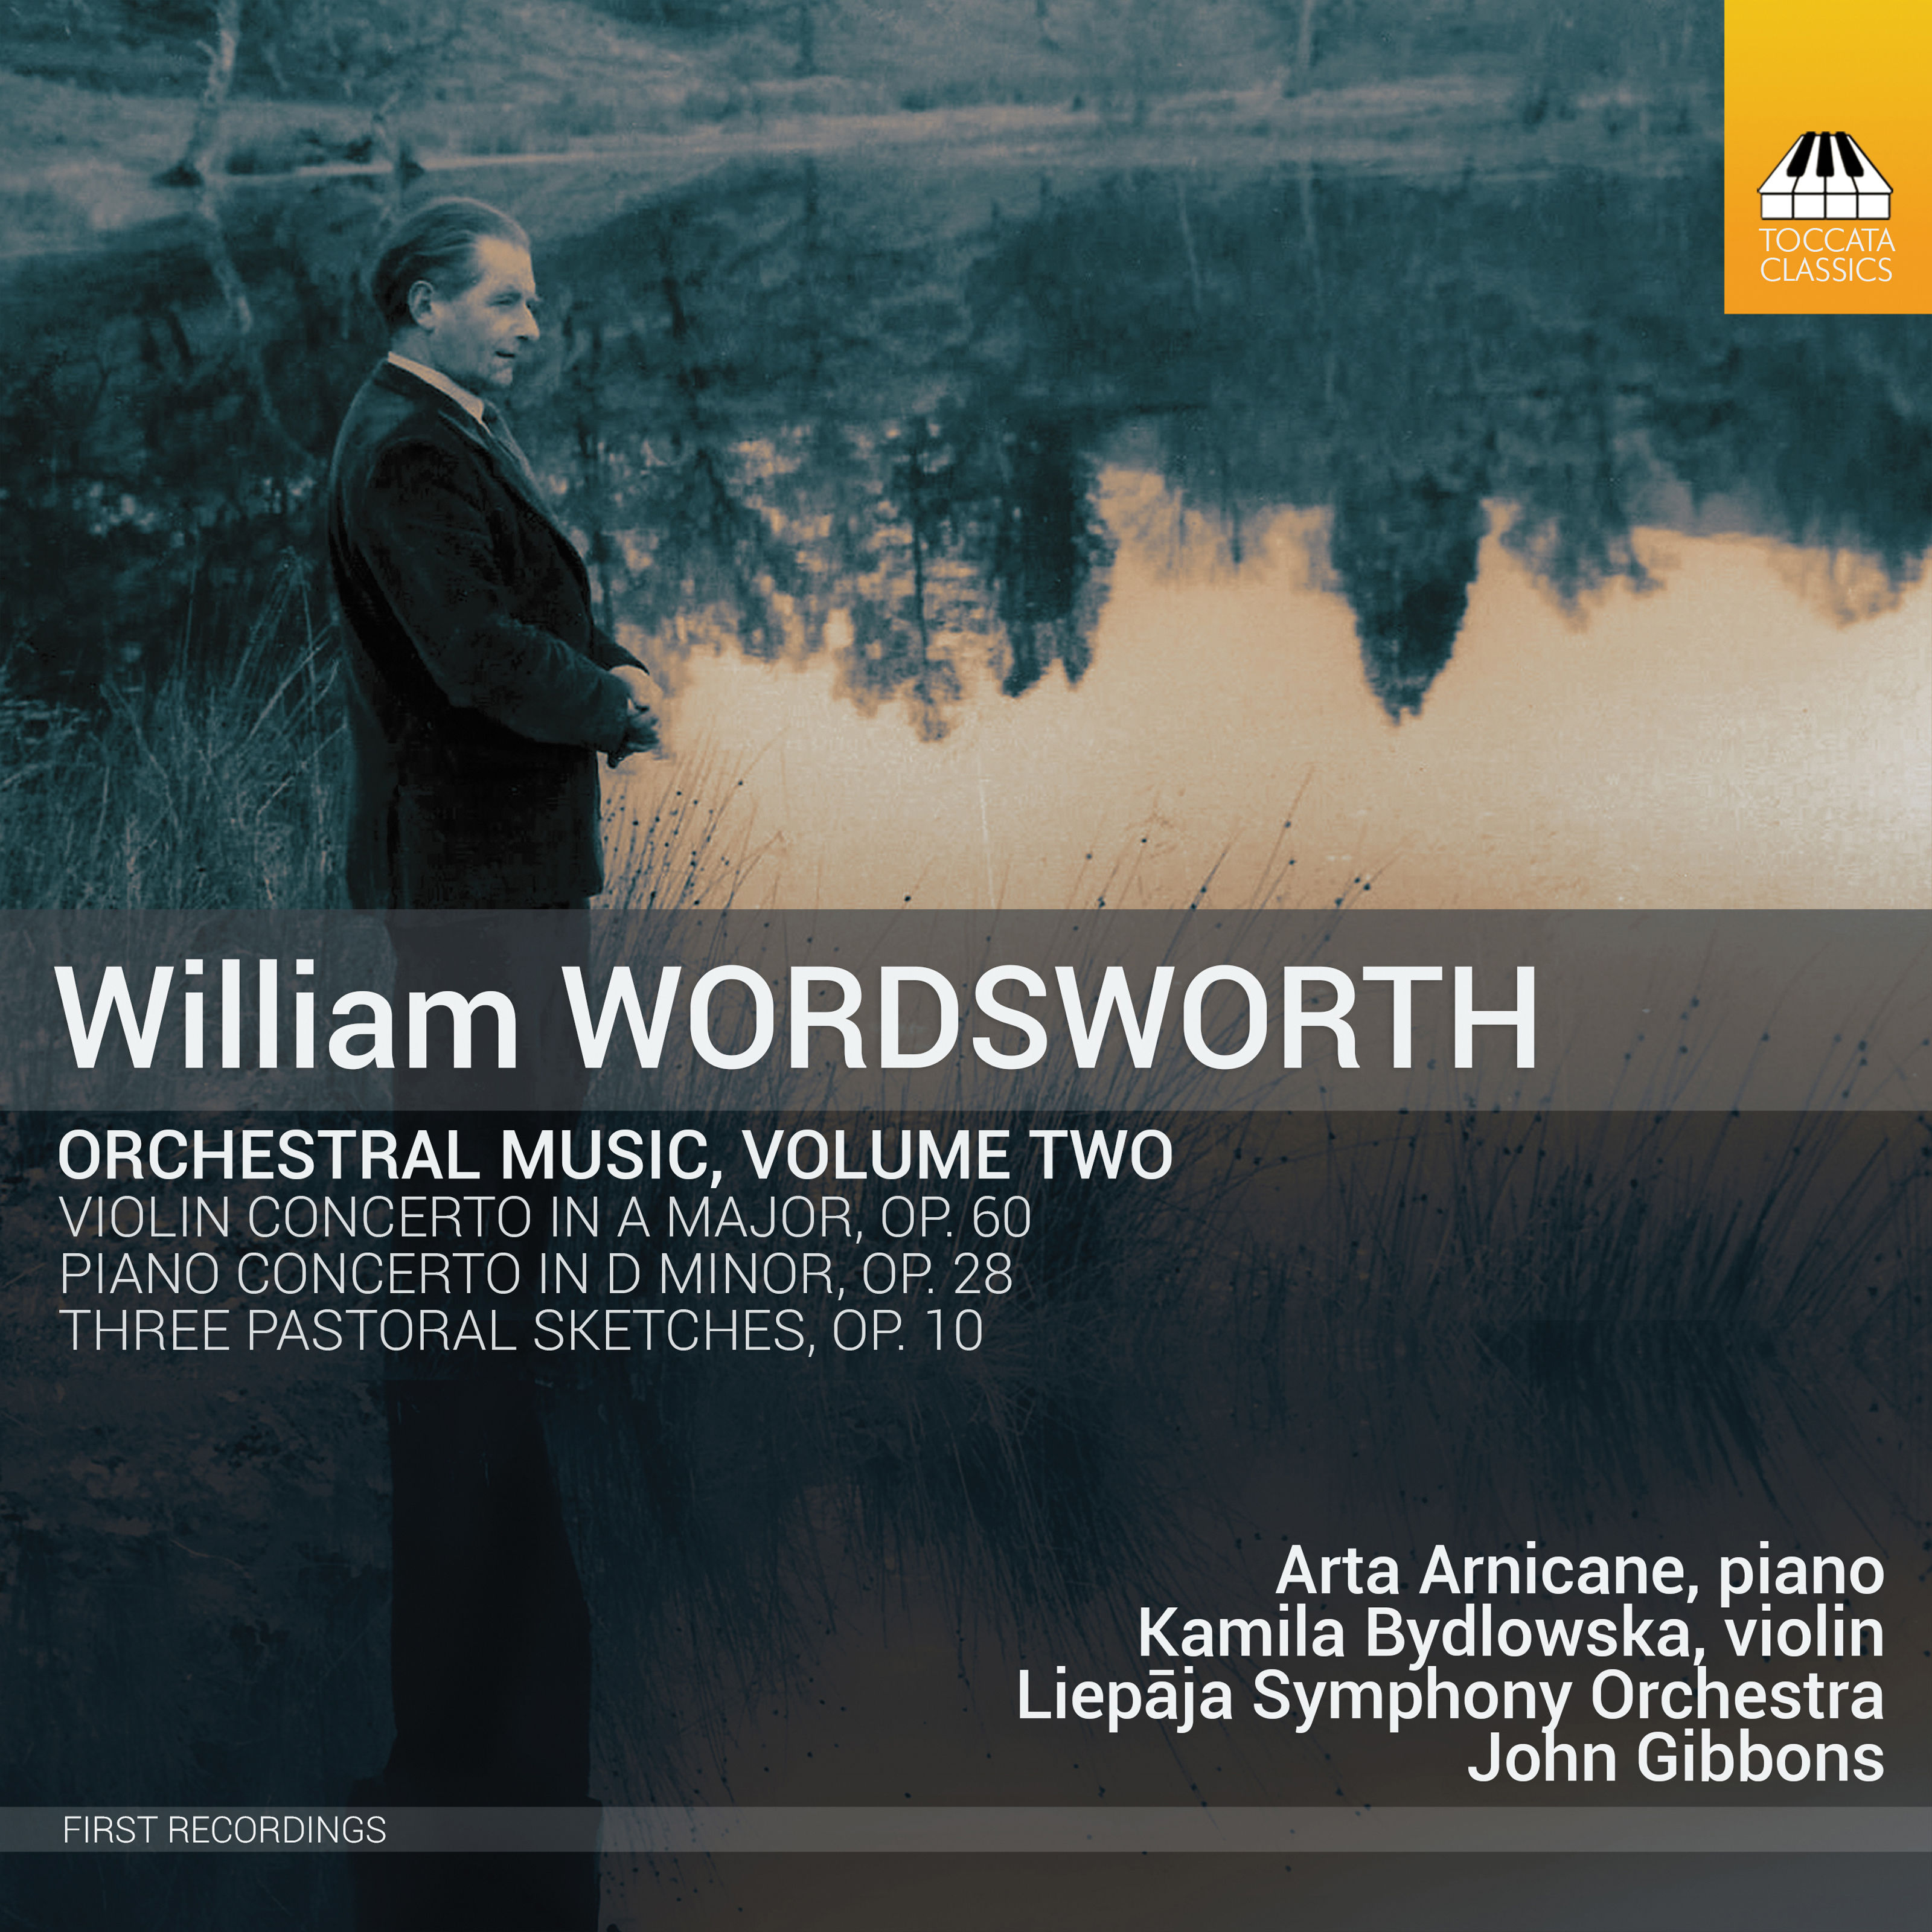 Liepaja Symphony Orchestra & John Gibbons - Wordsworth: Orchestral Music, Vol. 2 (2019) [FLAC 24bit/96kHz]